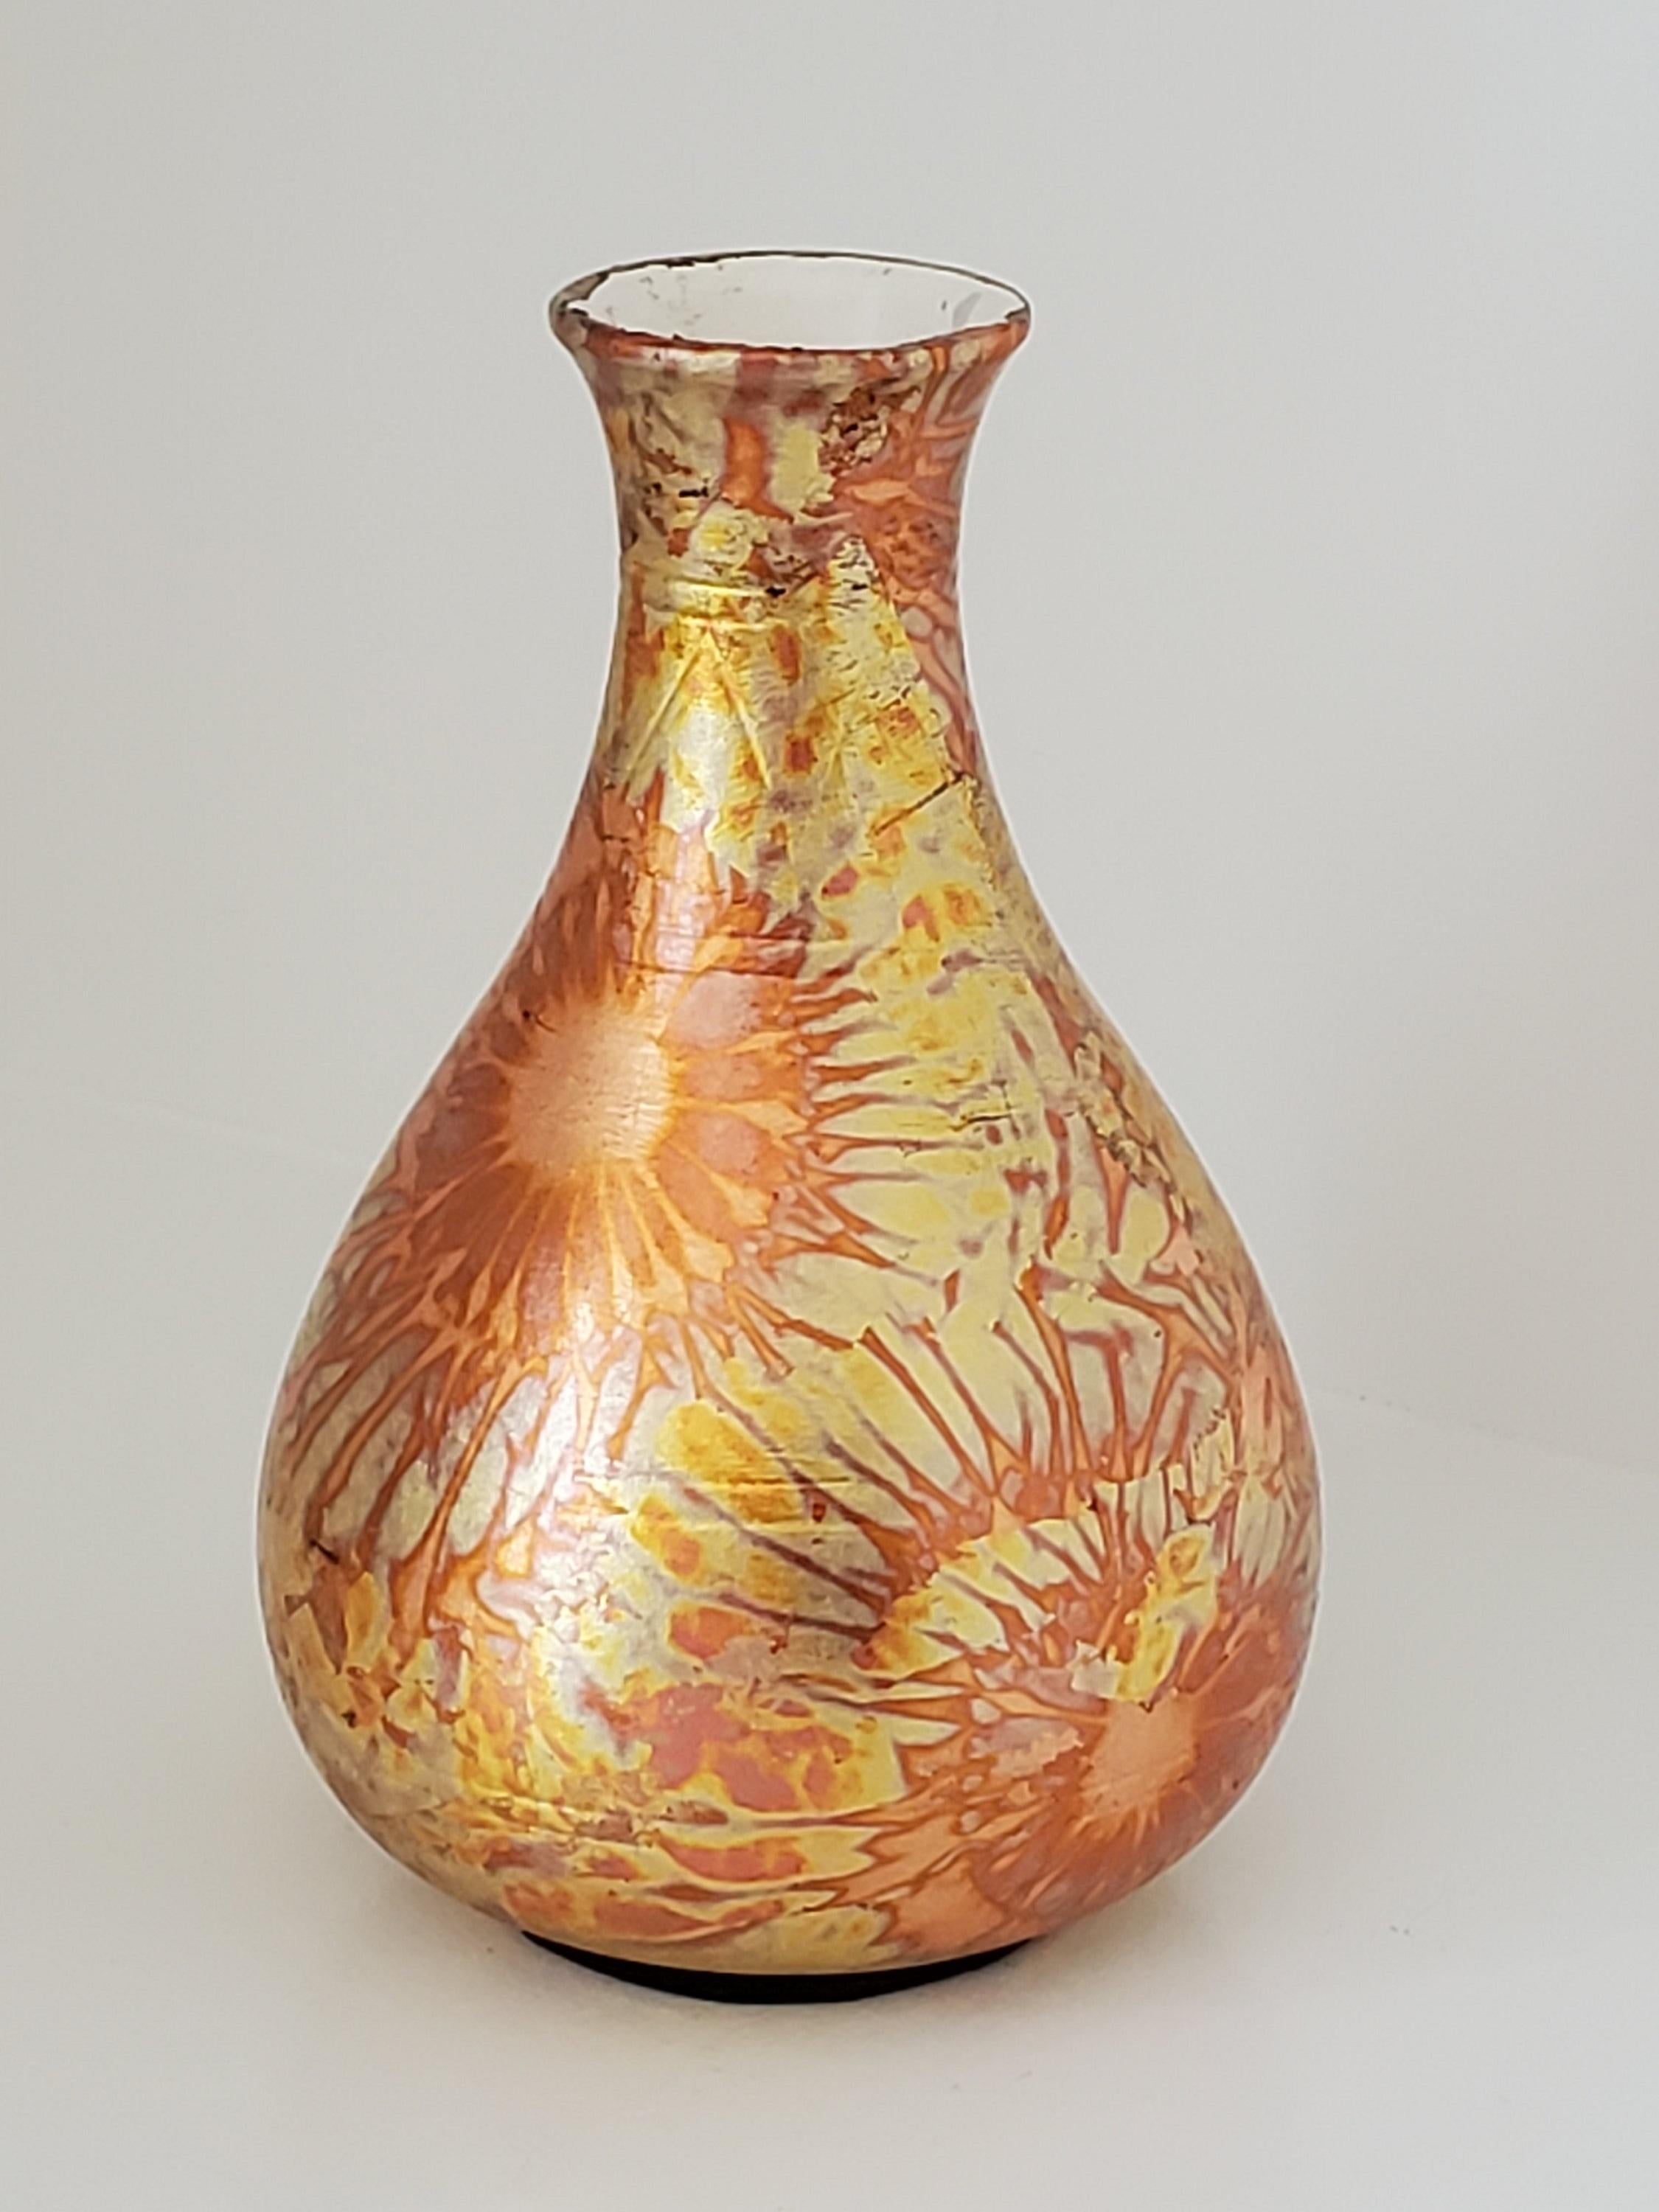 Contemporary Raku Pottery Vase from NW Raku Gallery For Sale